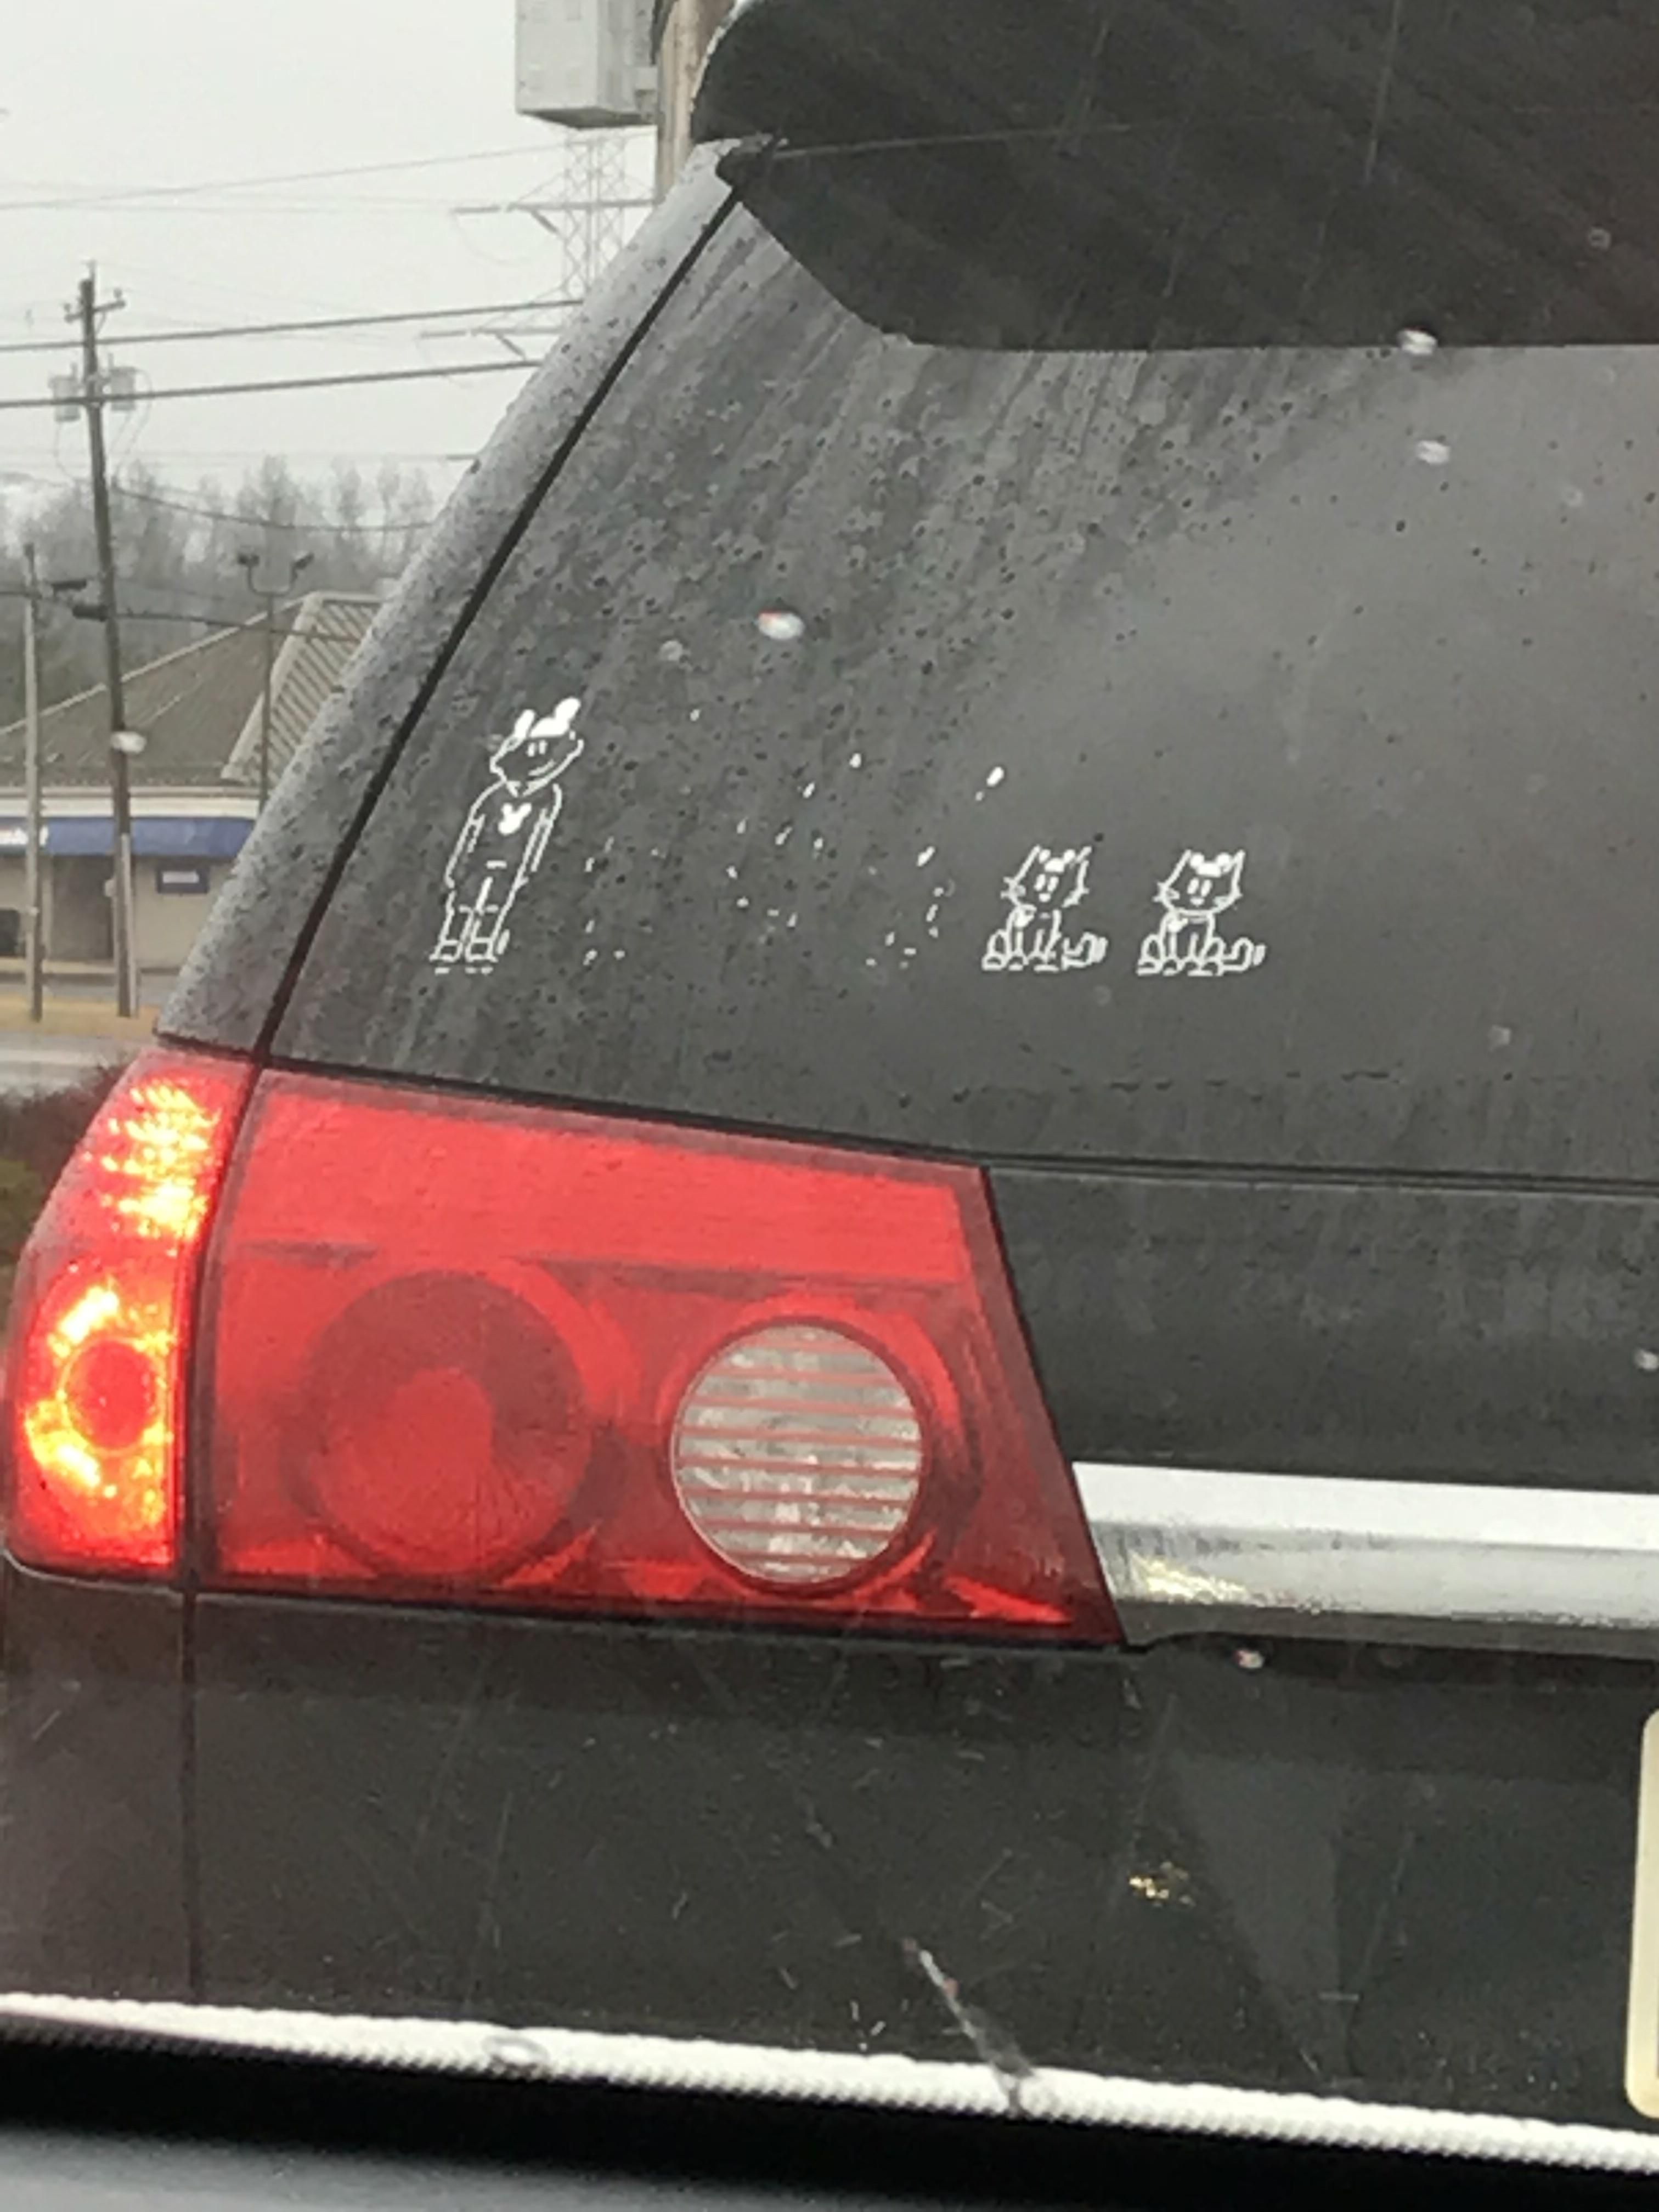 Divorced. Just a man, his van and his cats.